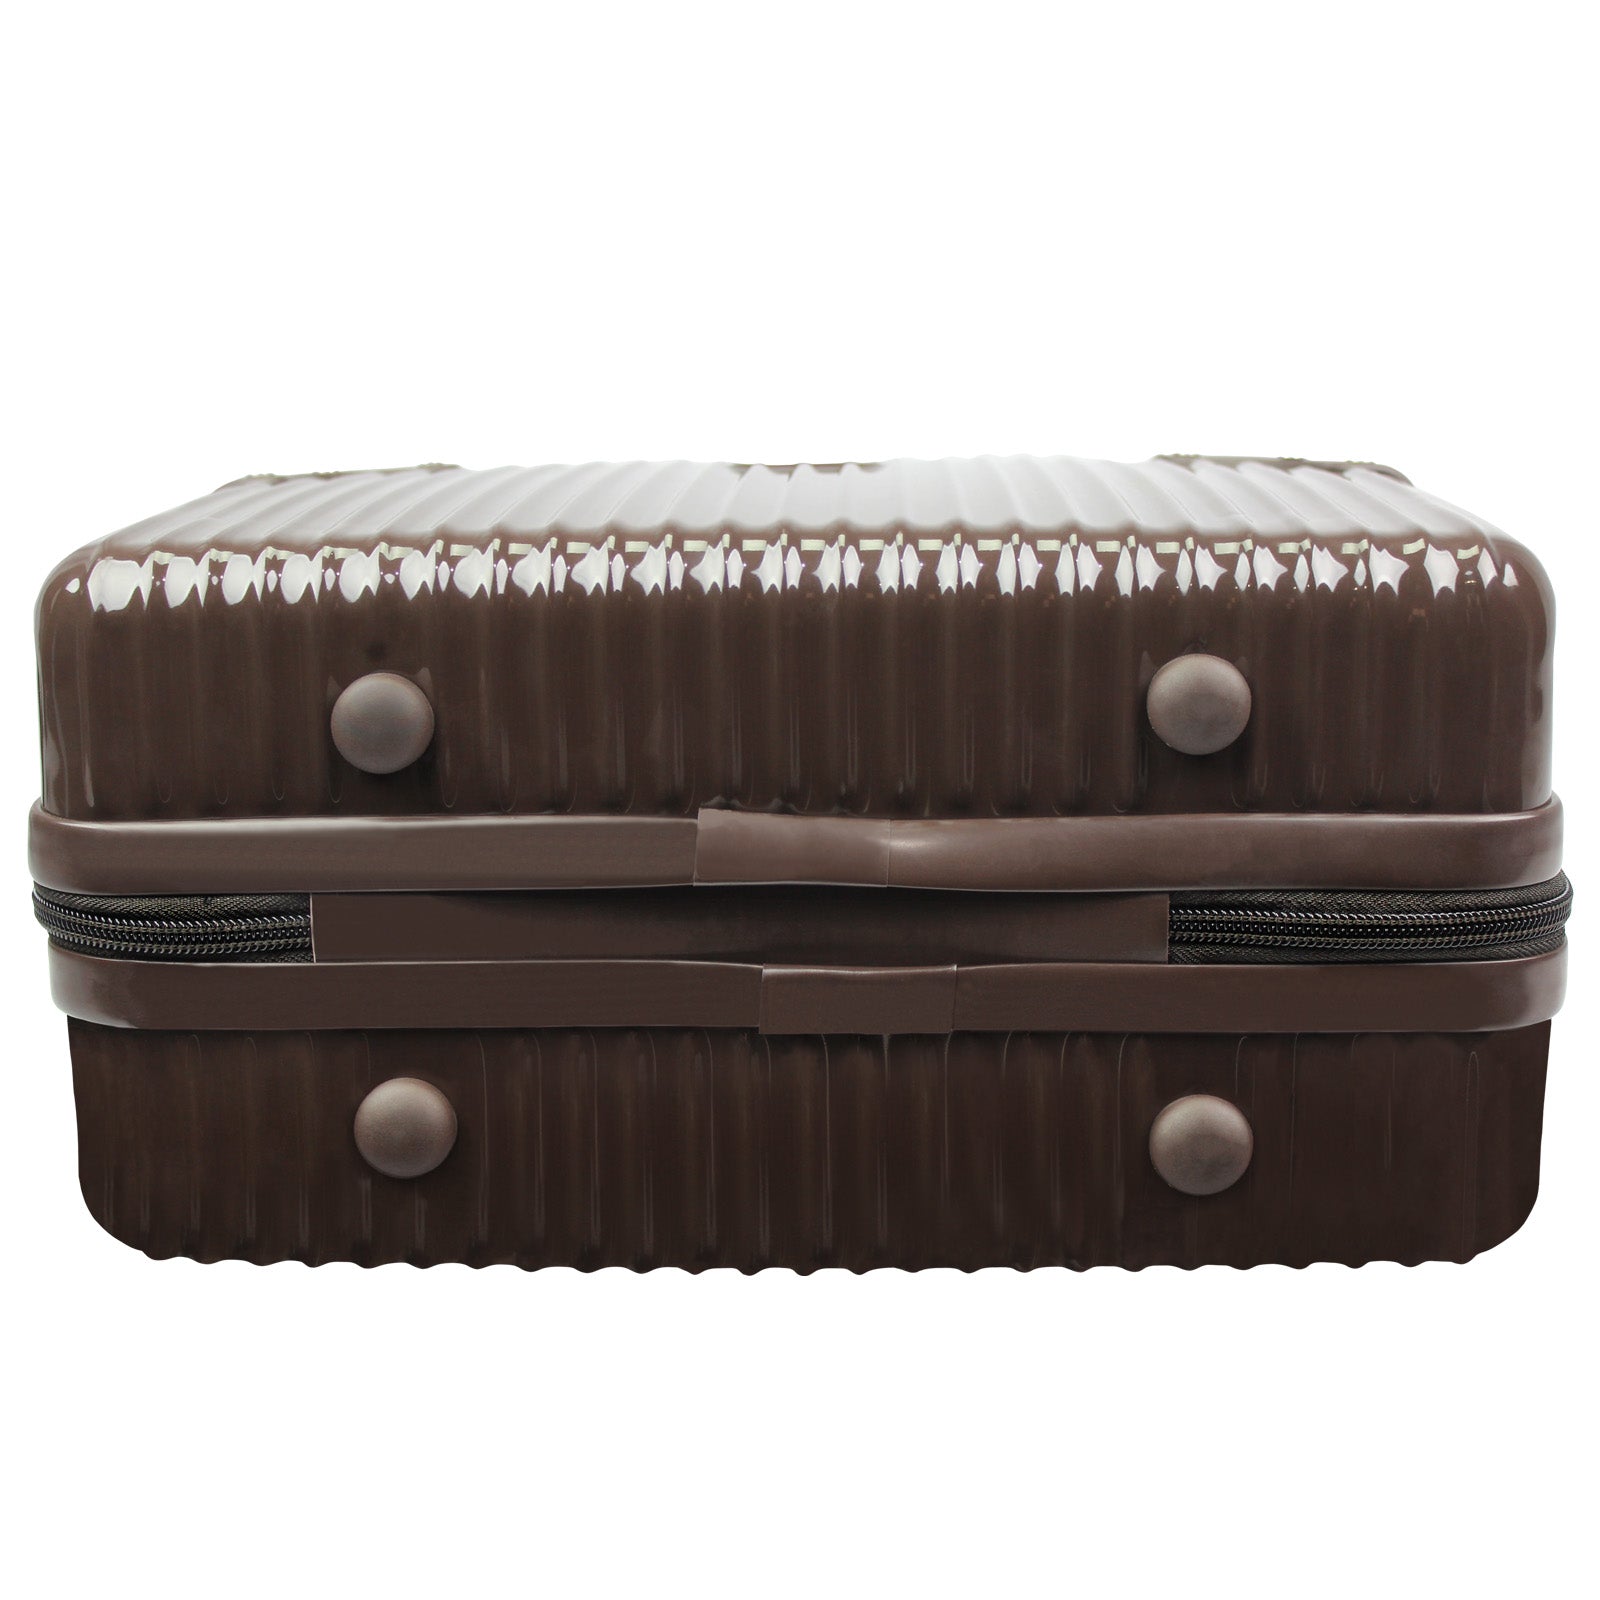 World Traveler Highways 2-Piece Hardside Carry-On Spinner Luggage Set